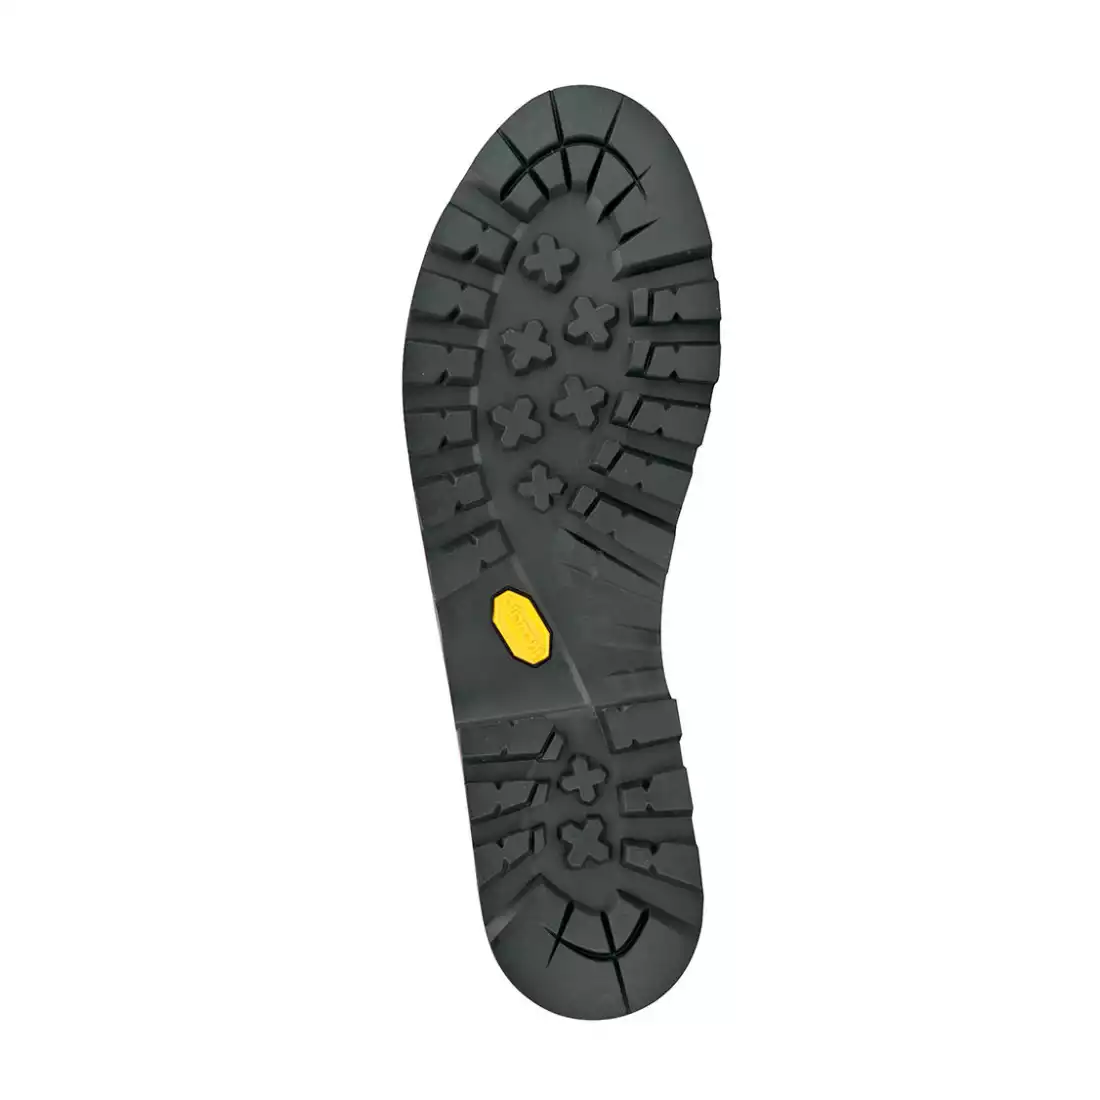 KAYLAND CROSS MOUNTAIN GTX Pánské trekové boty, GORE-TEX, VIBRAM, black and yellow